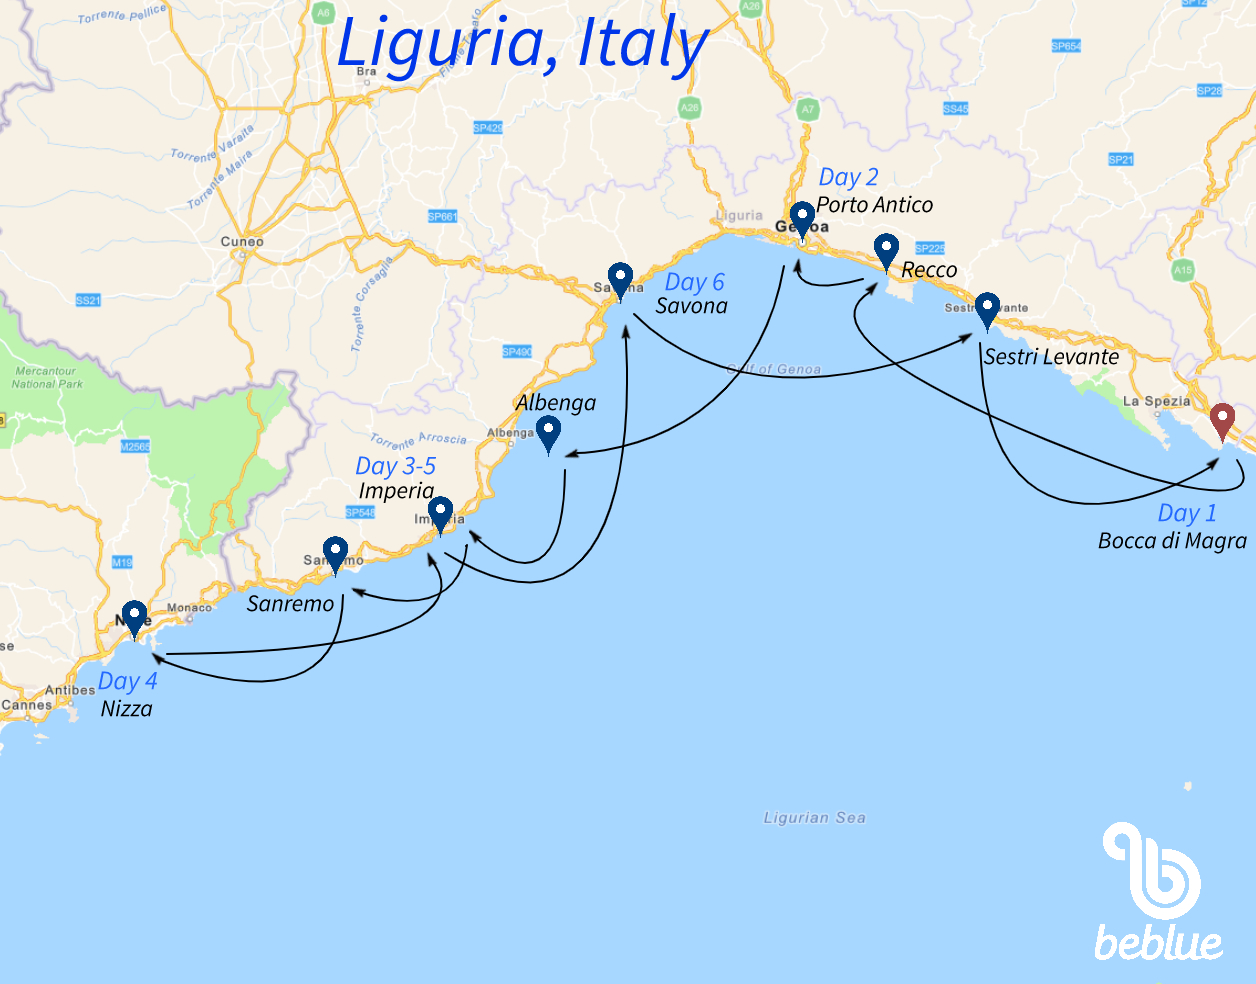 Italy: Region of Liguria